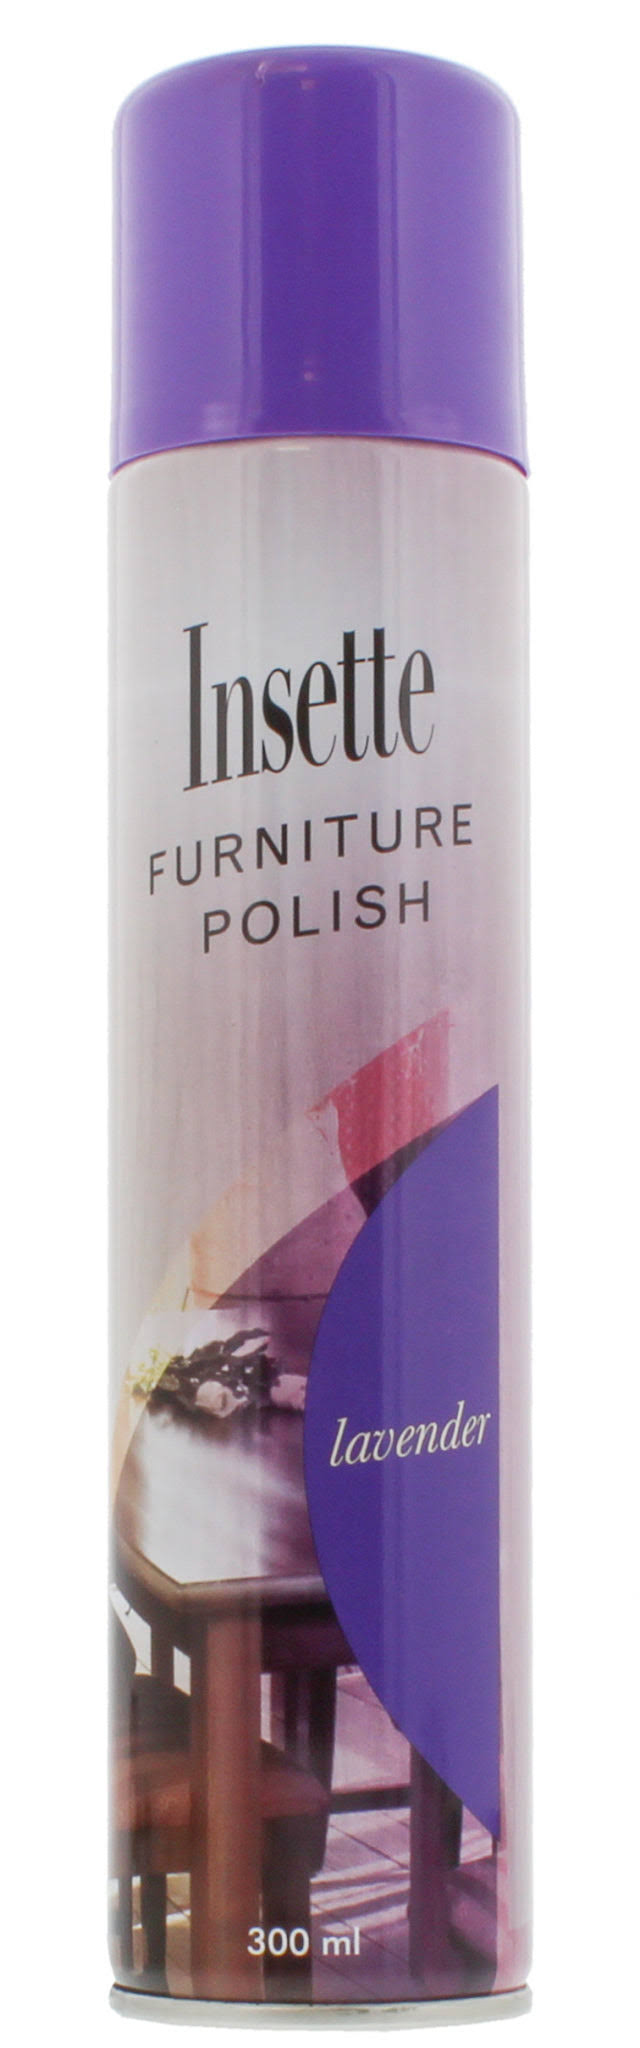 Insette 300ml Furniture Polish Lavender